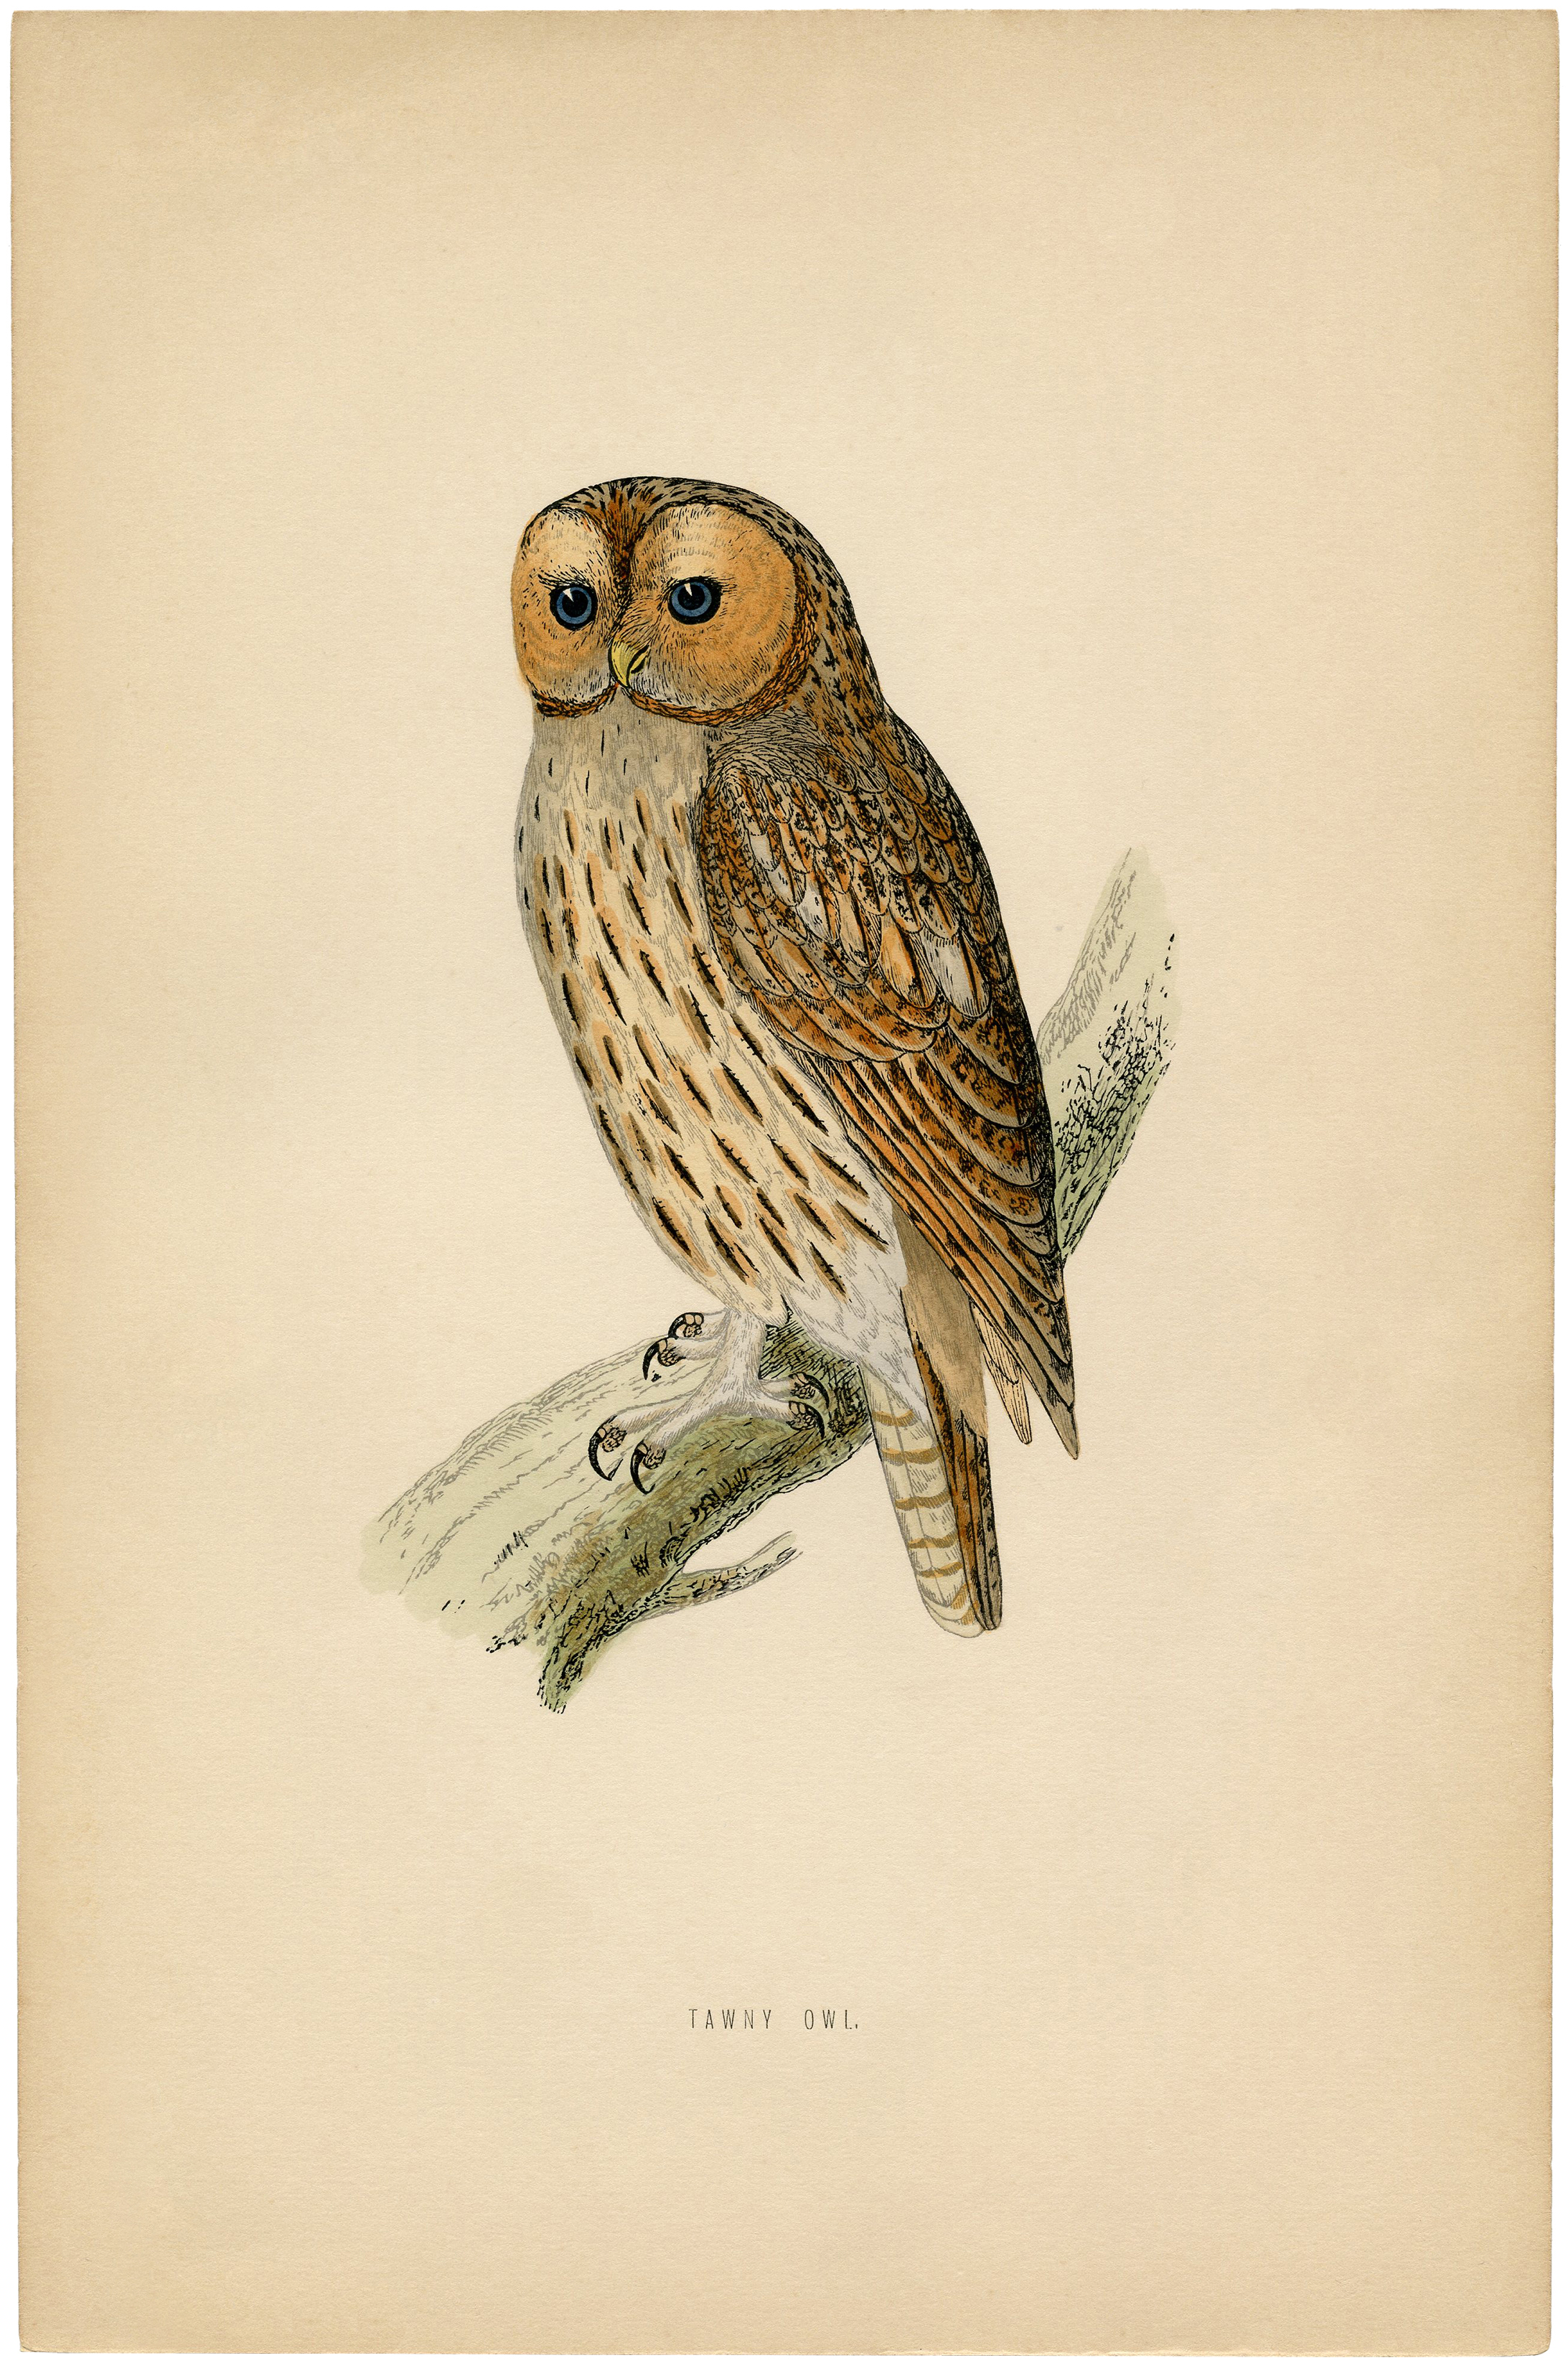 Retro Owl Wallpapers